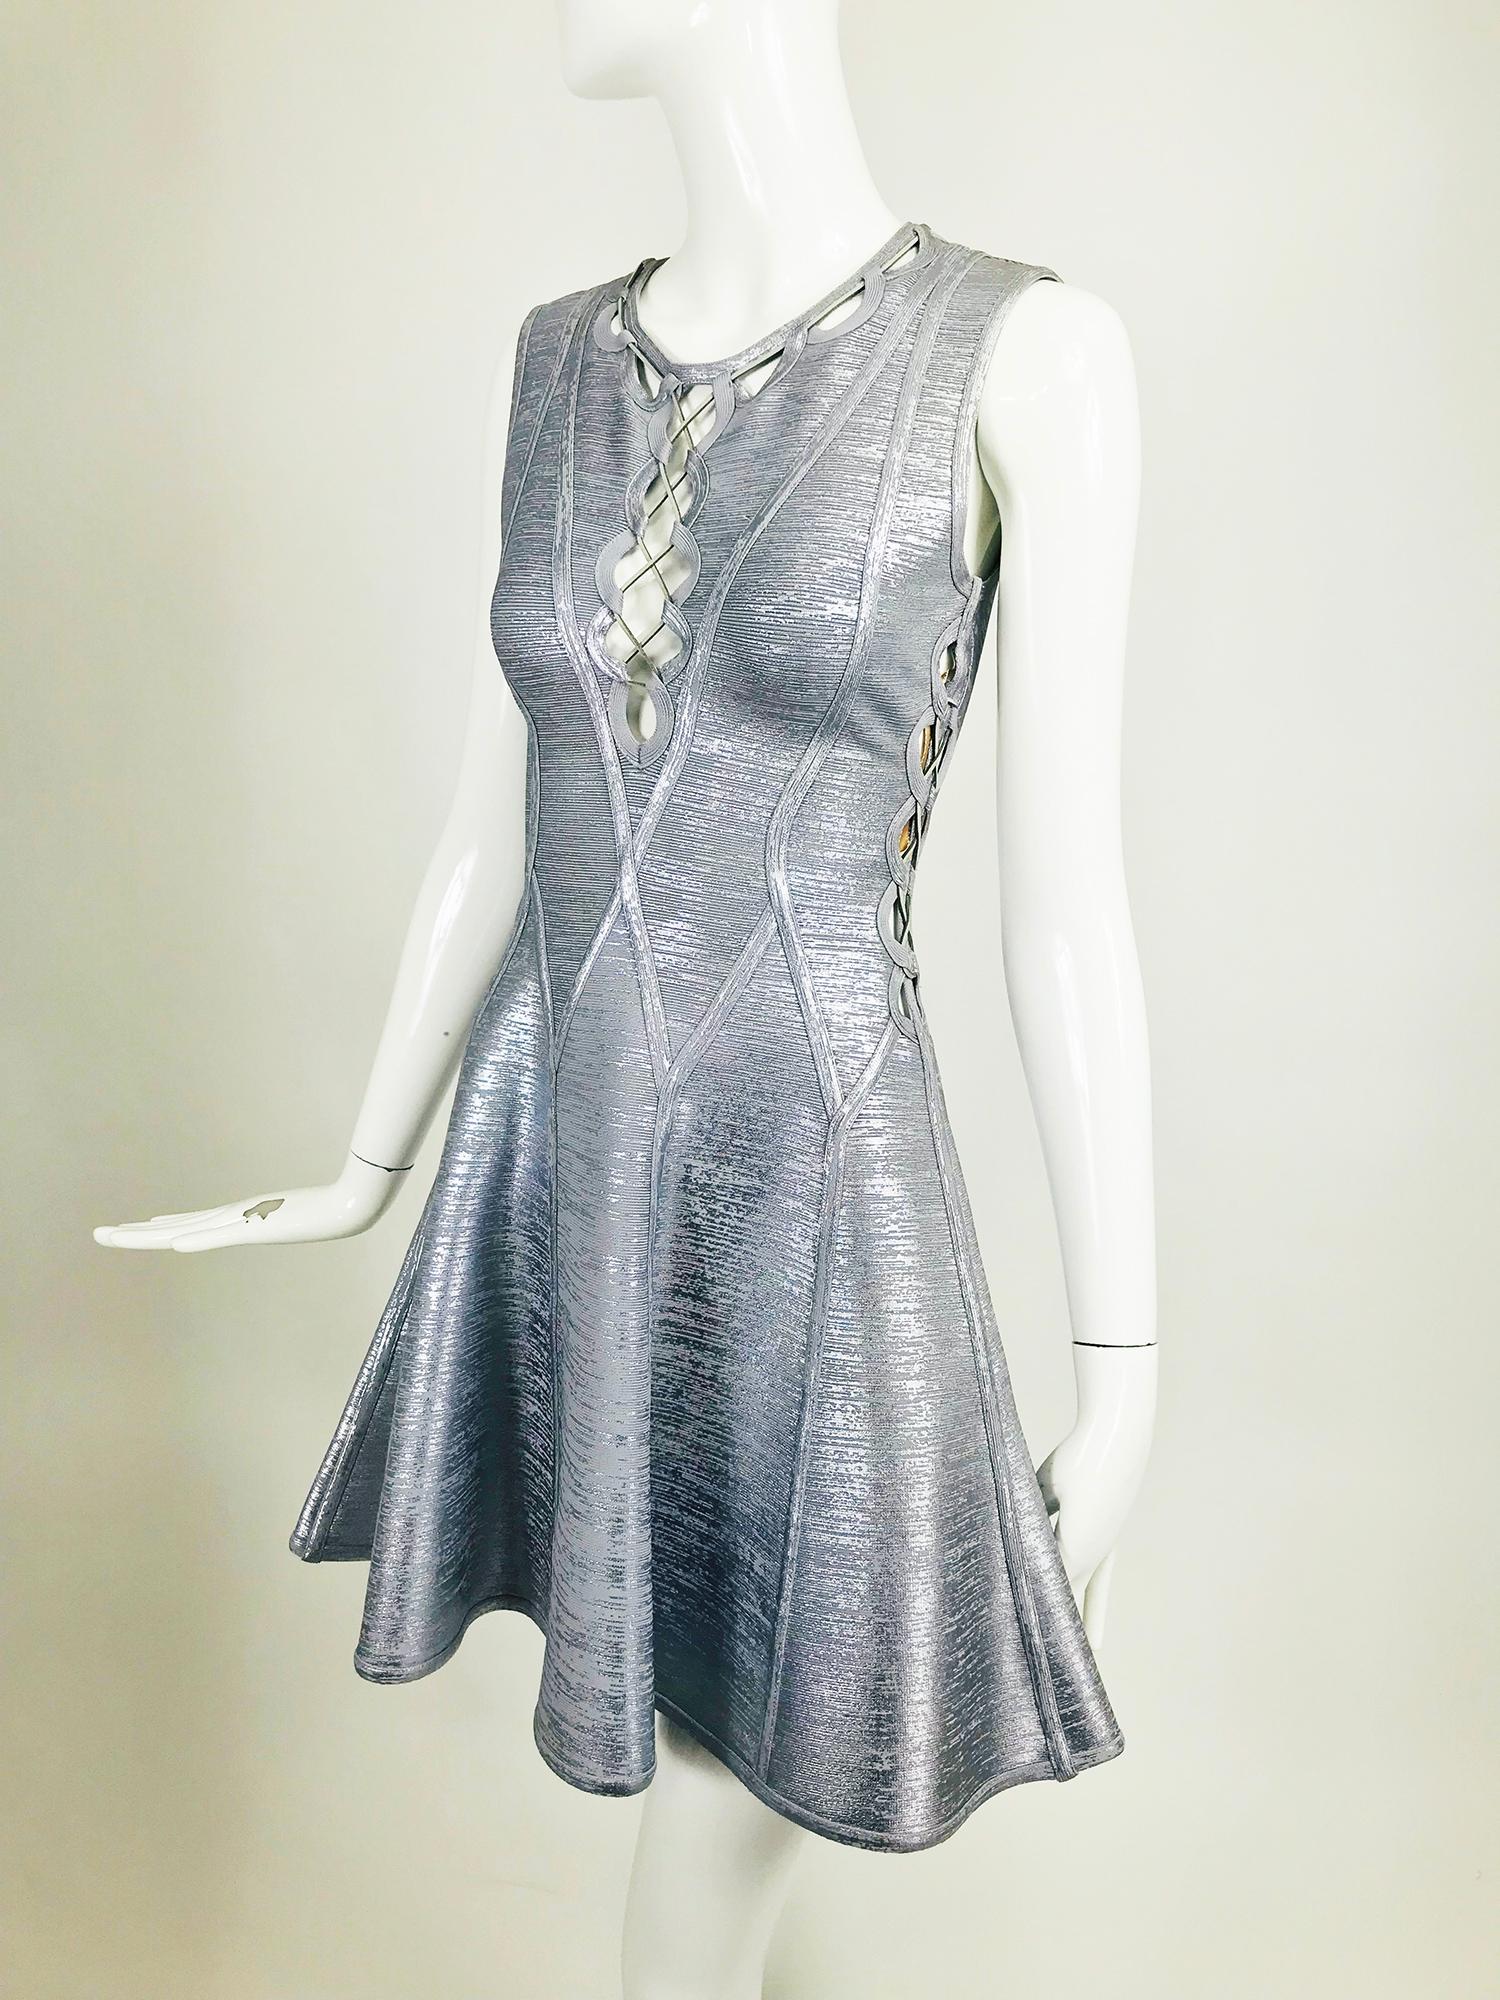 Herve Leger Silver Lavender Metallic Foil Lace Up Fit and Flare Bandage Dress 7